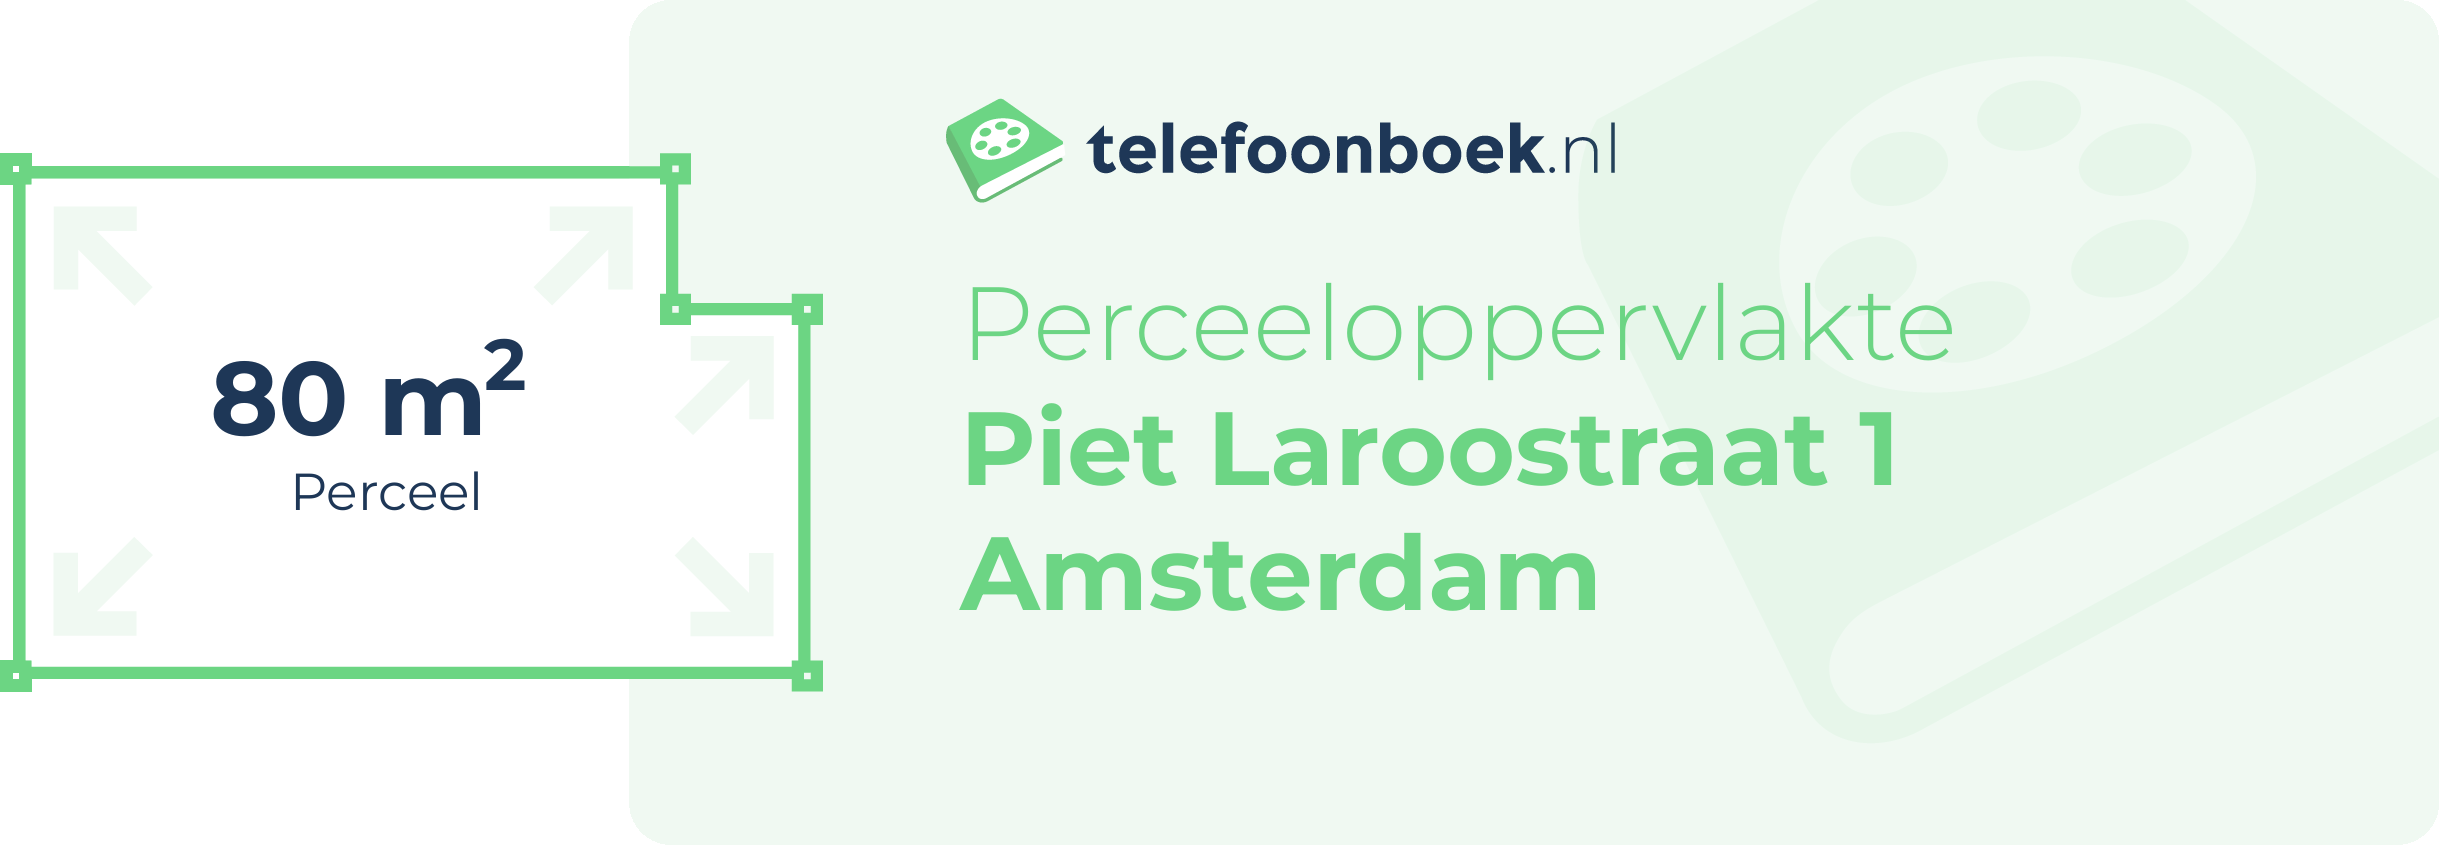 Perceeloppervlakte Piet Laroostraat 1 Amsterdam